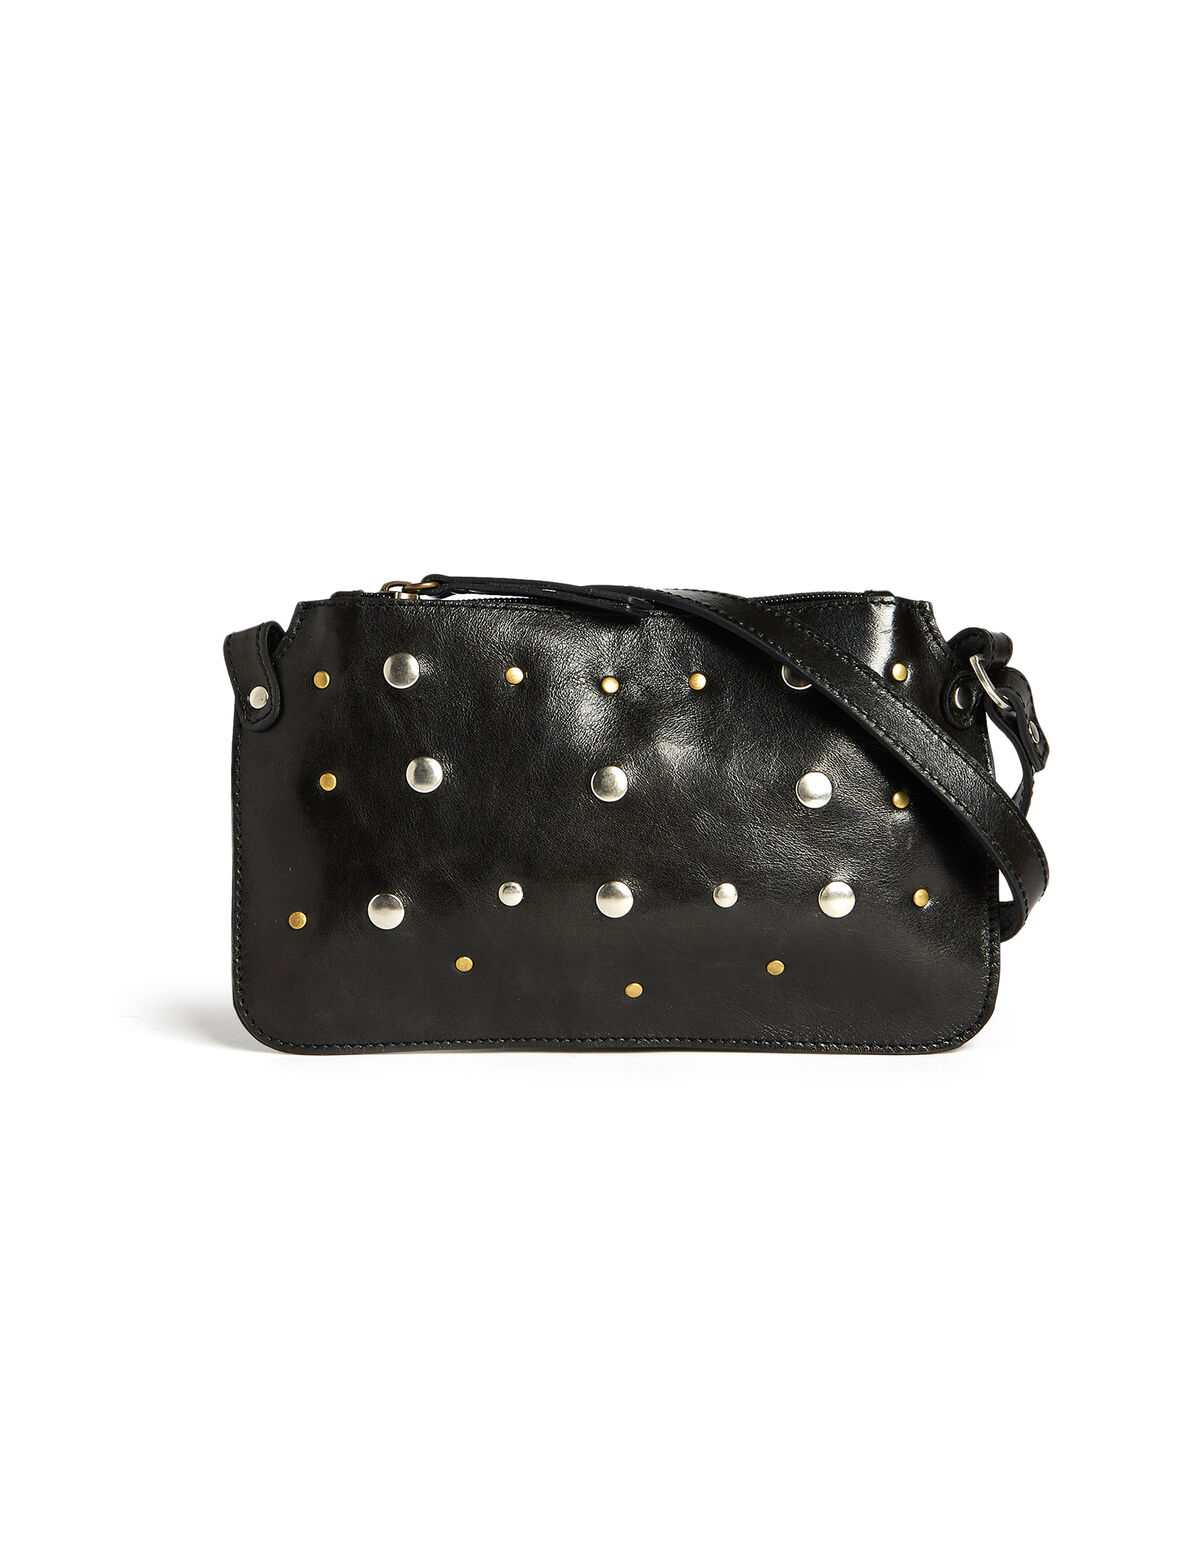 Studded black crossbody bag - Continuidad - Nícoli